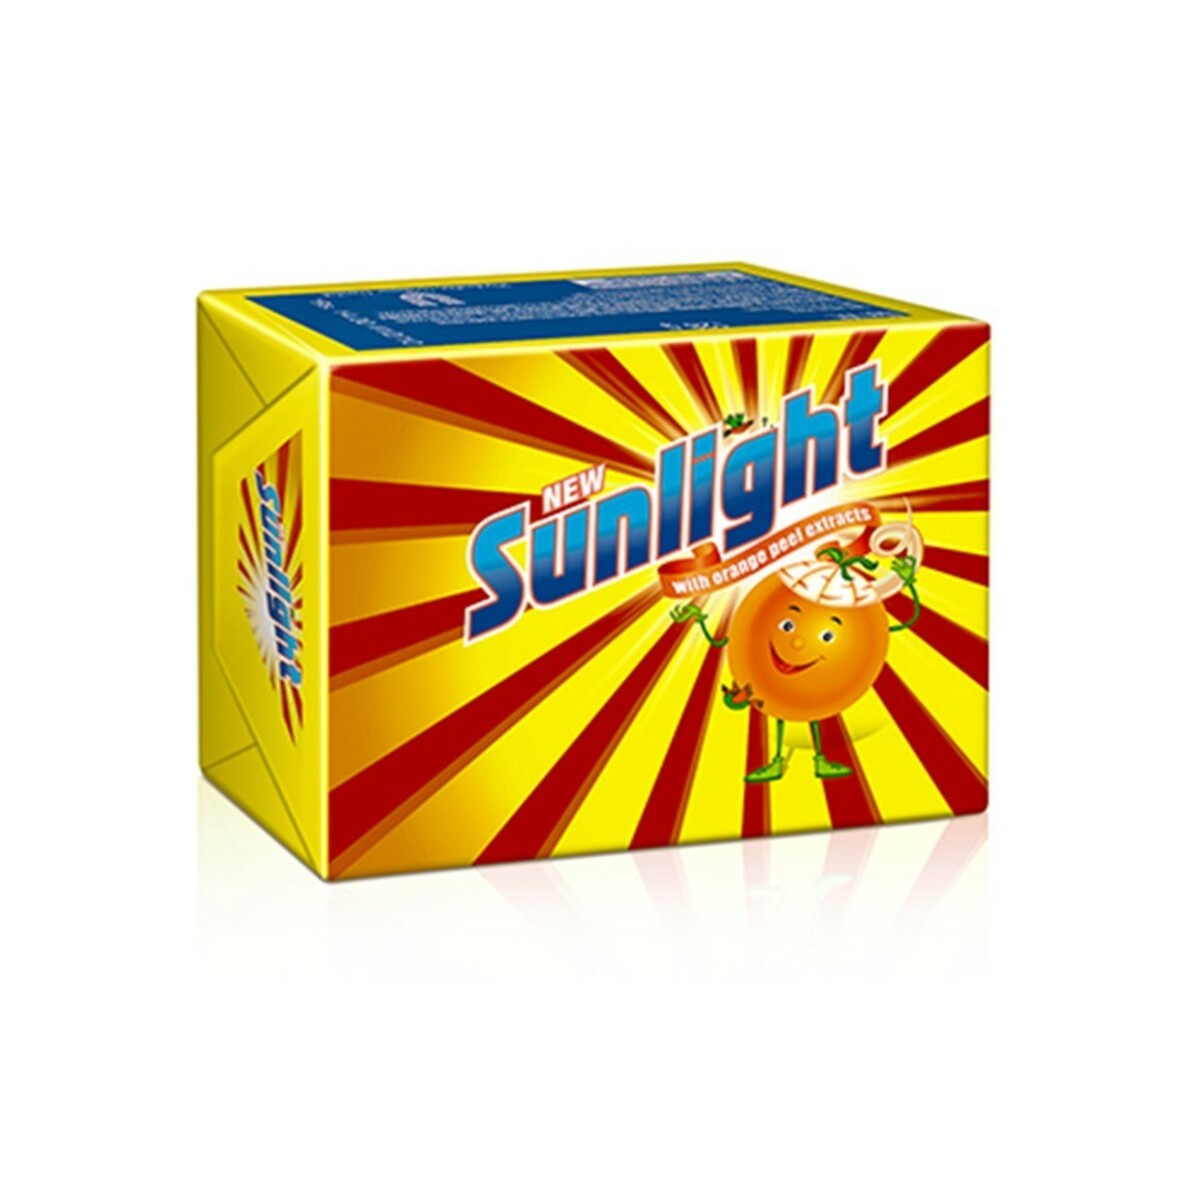 Sunlight Laundry Soap 150g